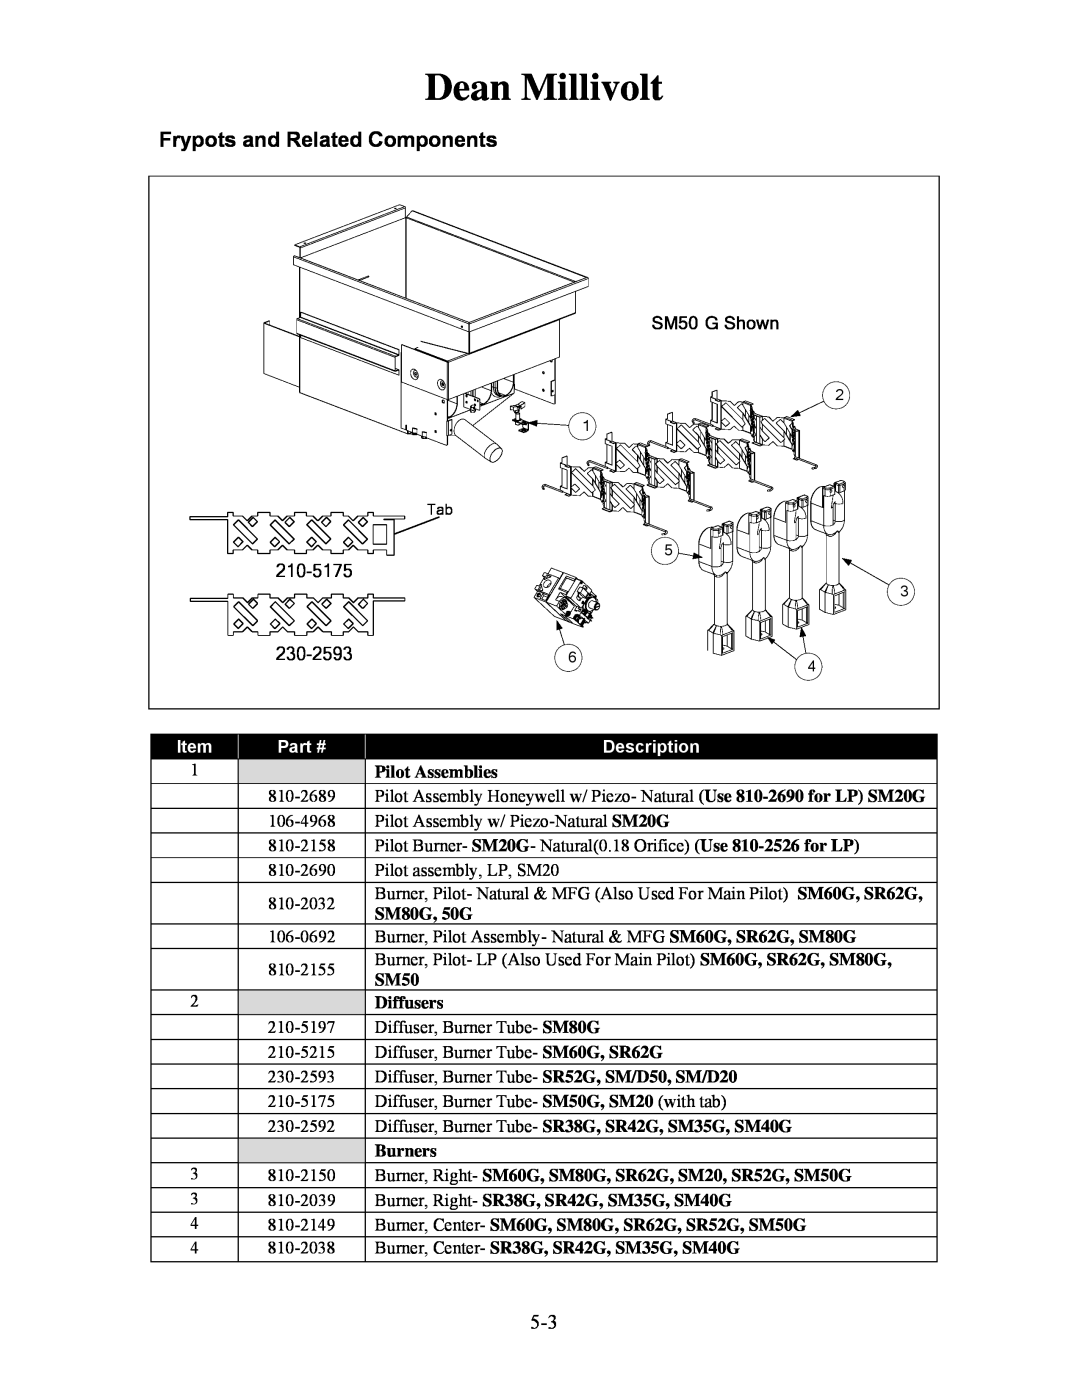 Frymaster H50 manual Dean Millivolt, Frypots and Related Components, Description 